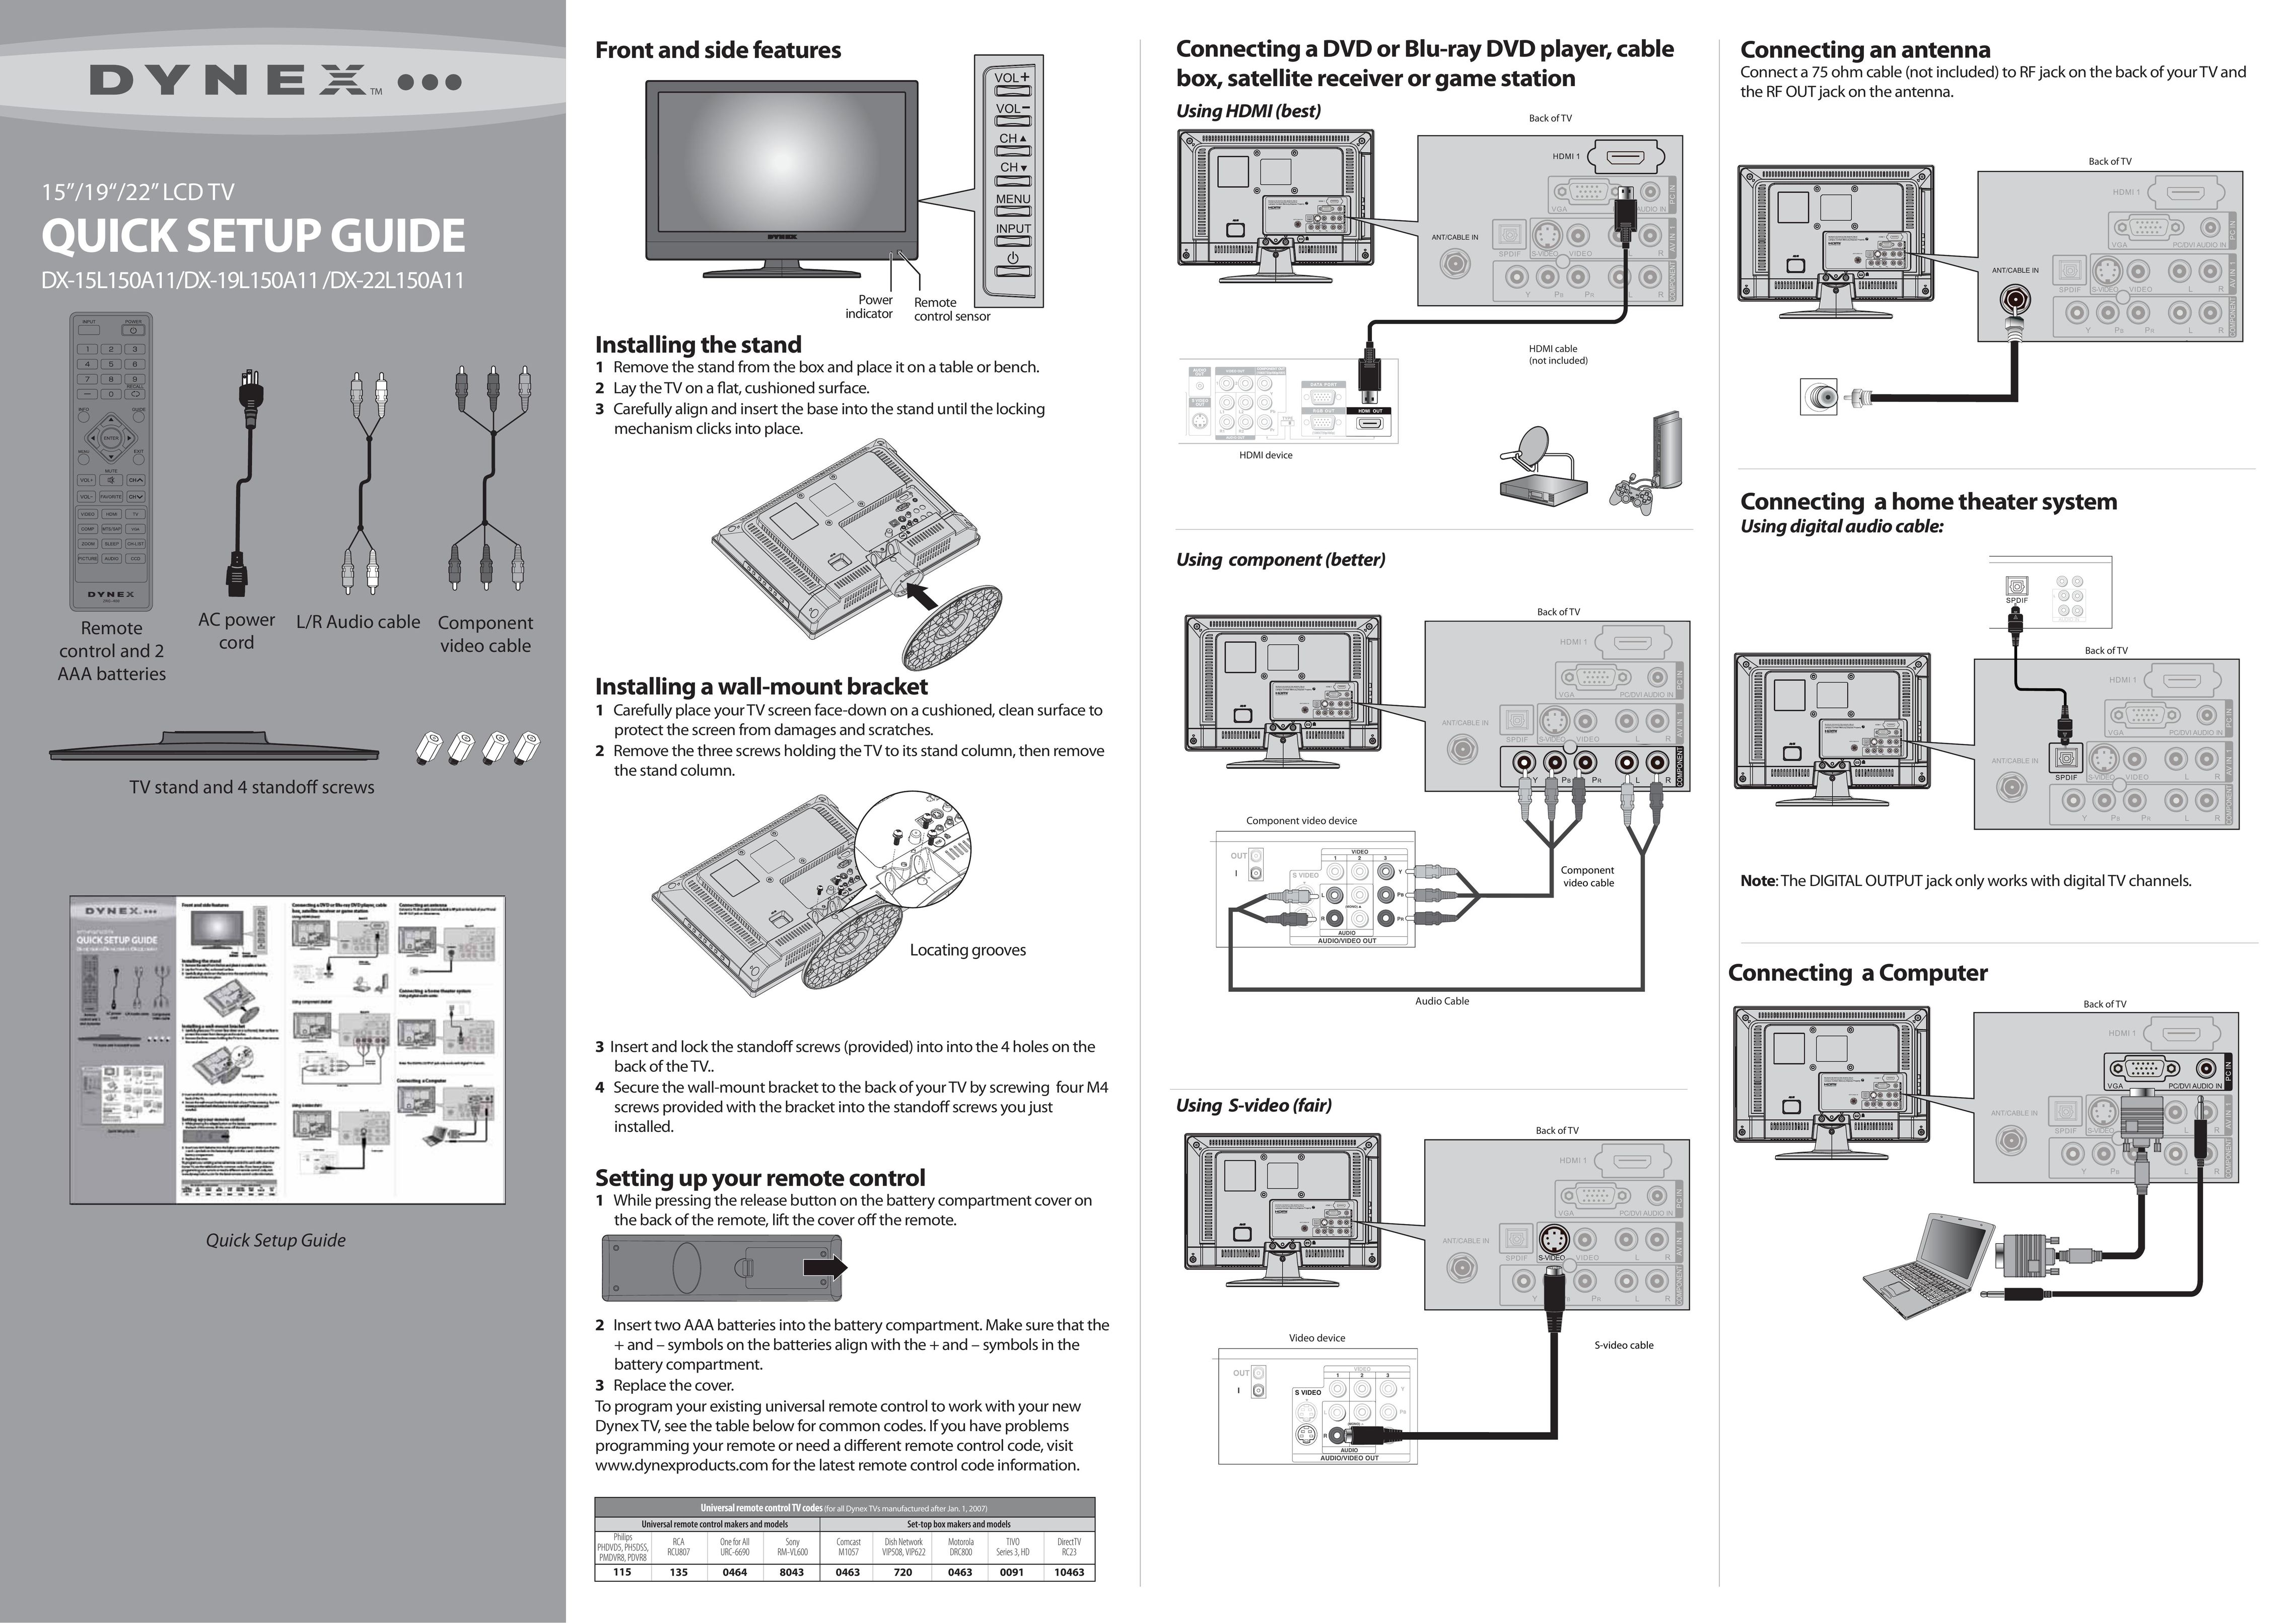 Dynex DX-15L150A11 Flat Panel Television User Manual